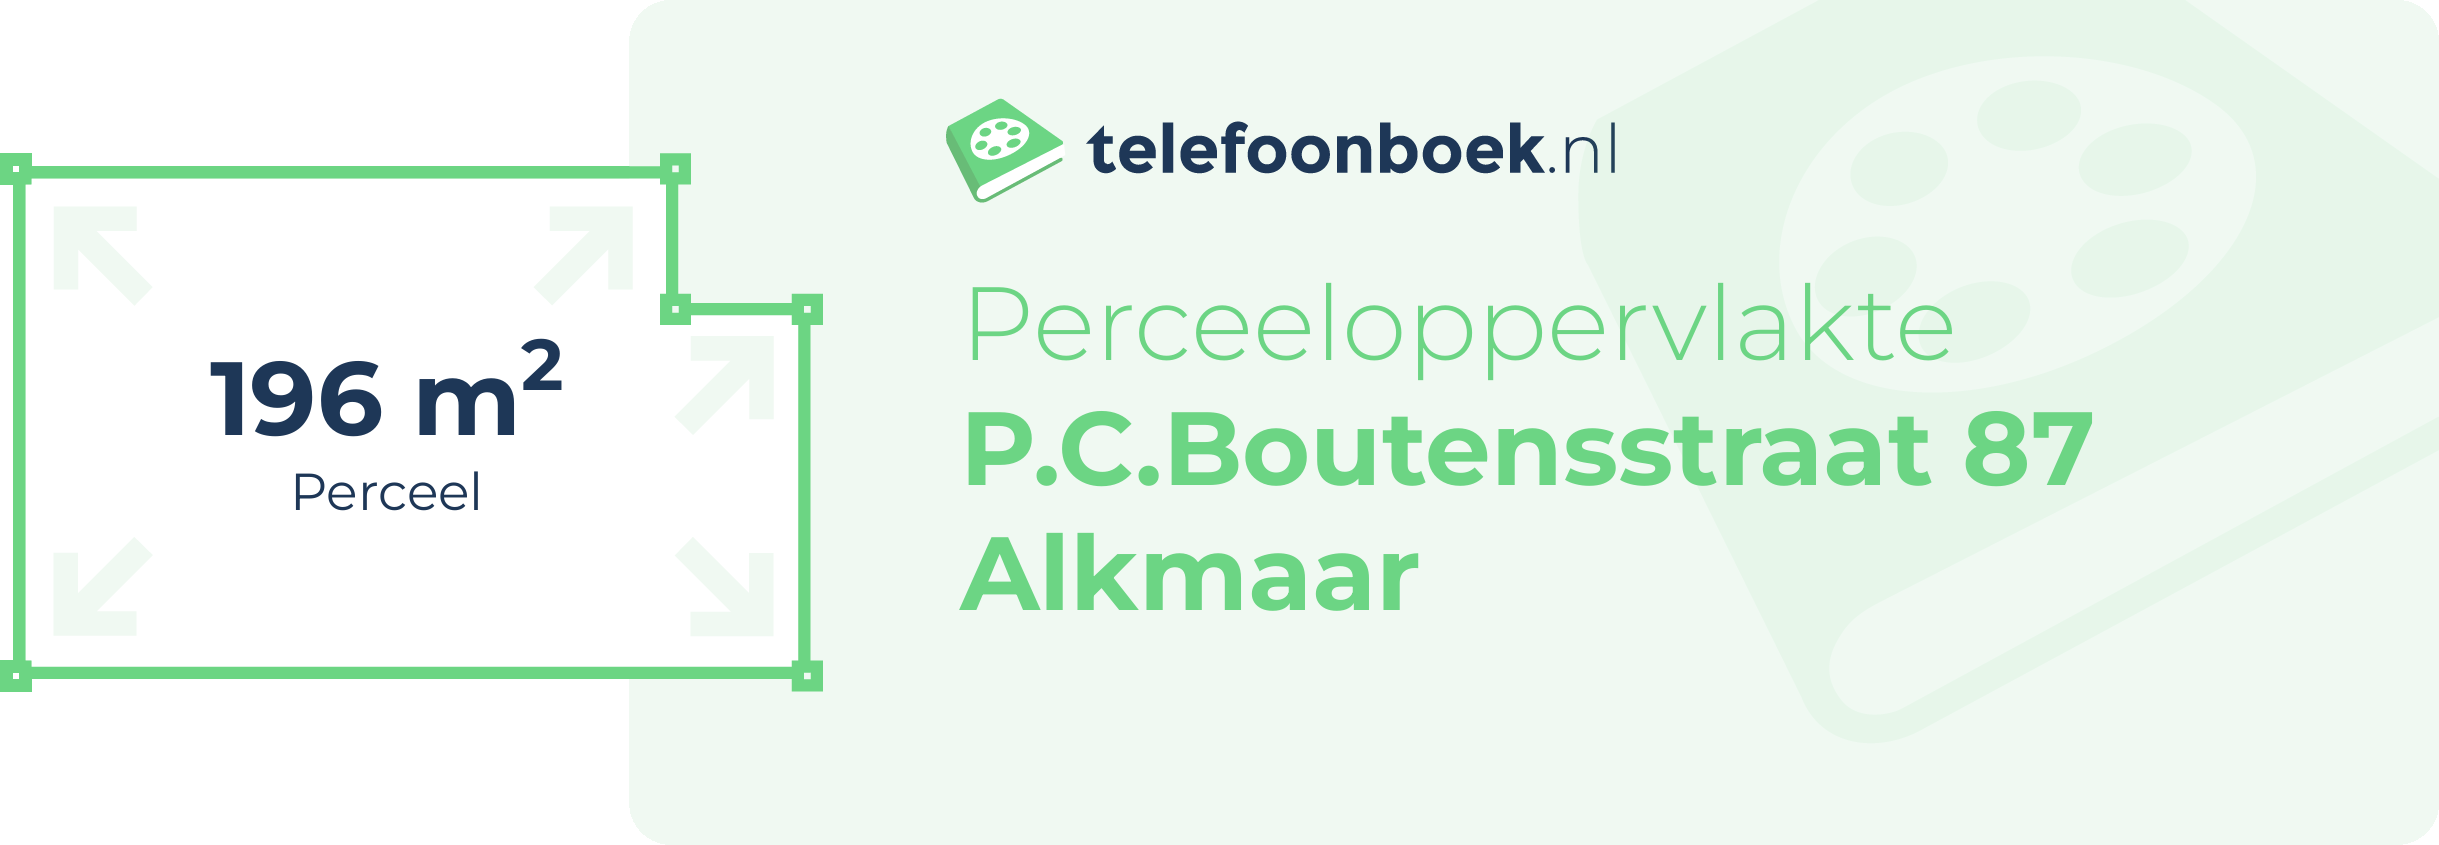 Perceeloppervlakte P.C.Boutensstraat 87 Alkmaar